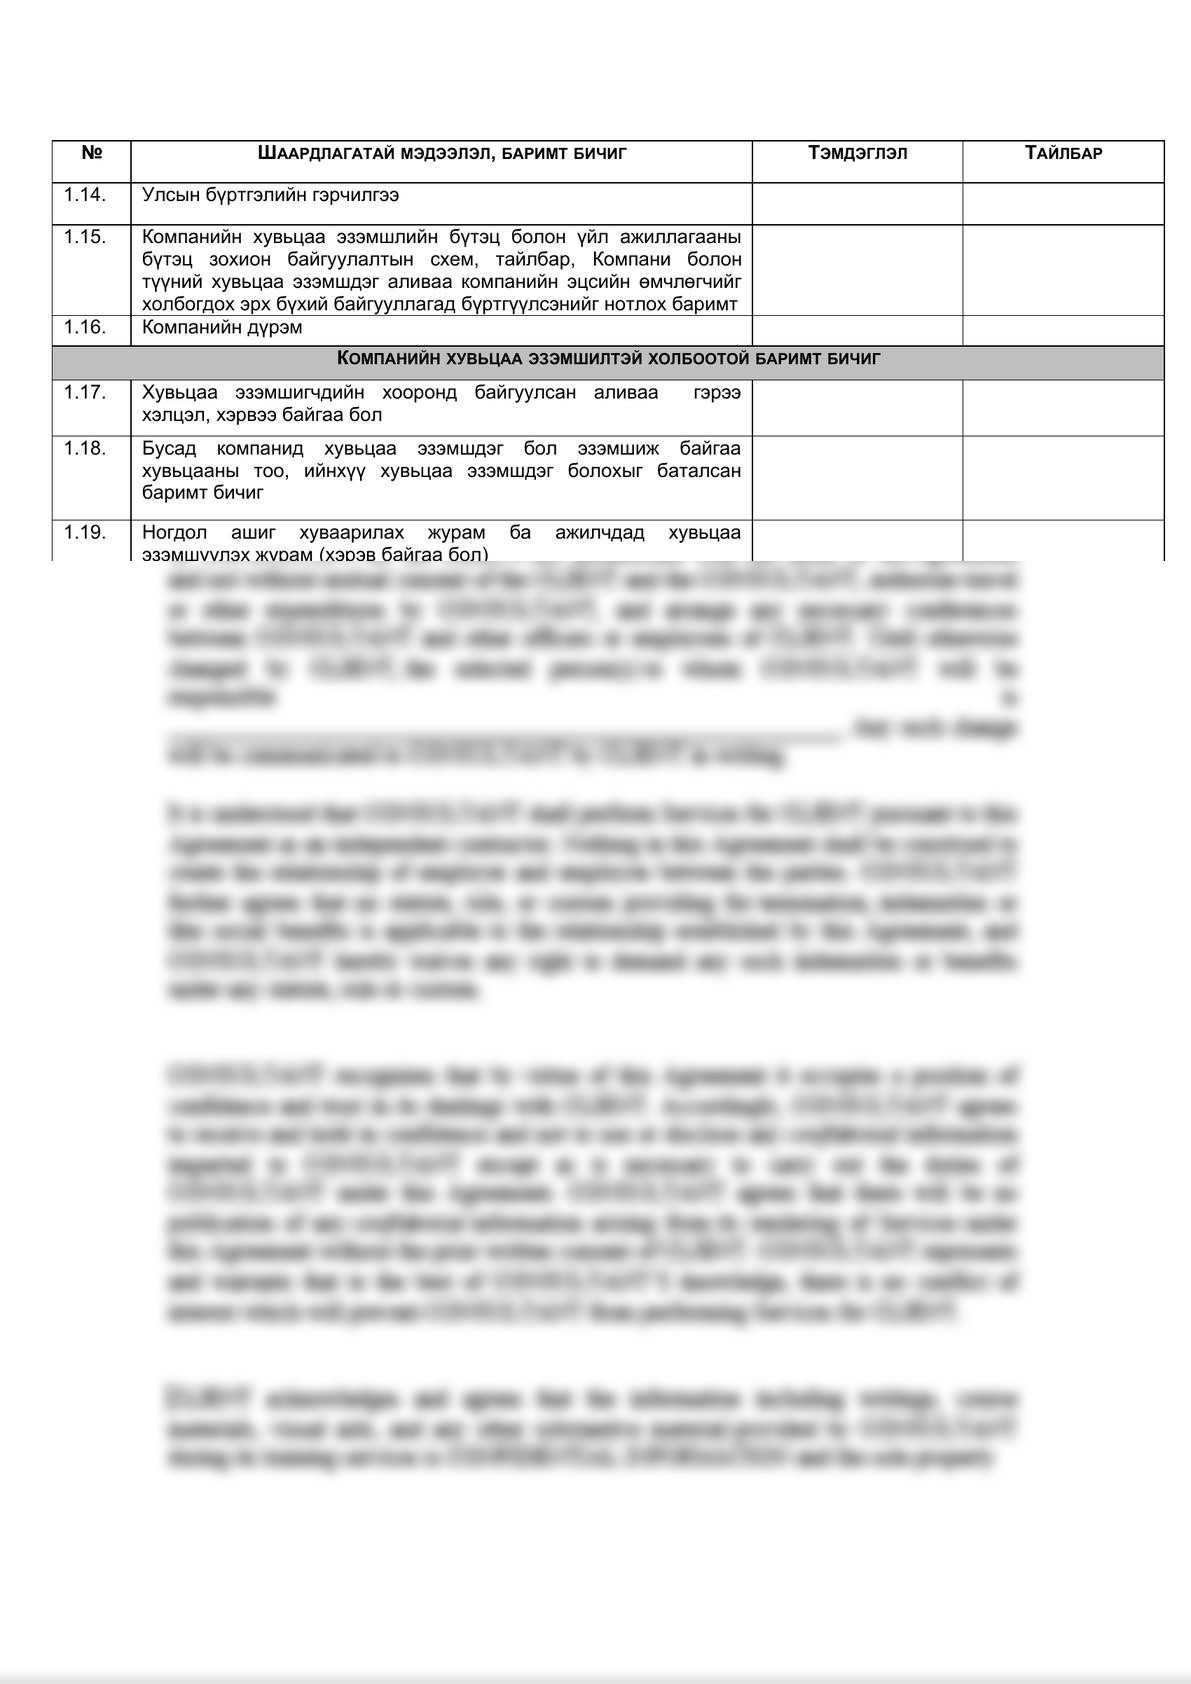 Legal due diligence checklist (Mongolian legal entities)    -6